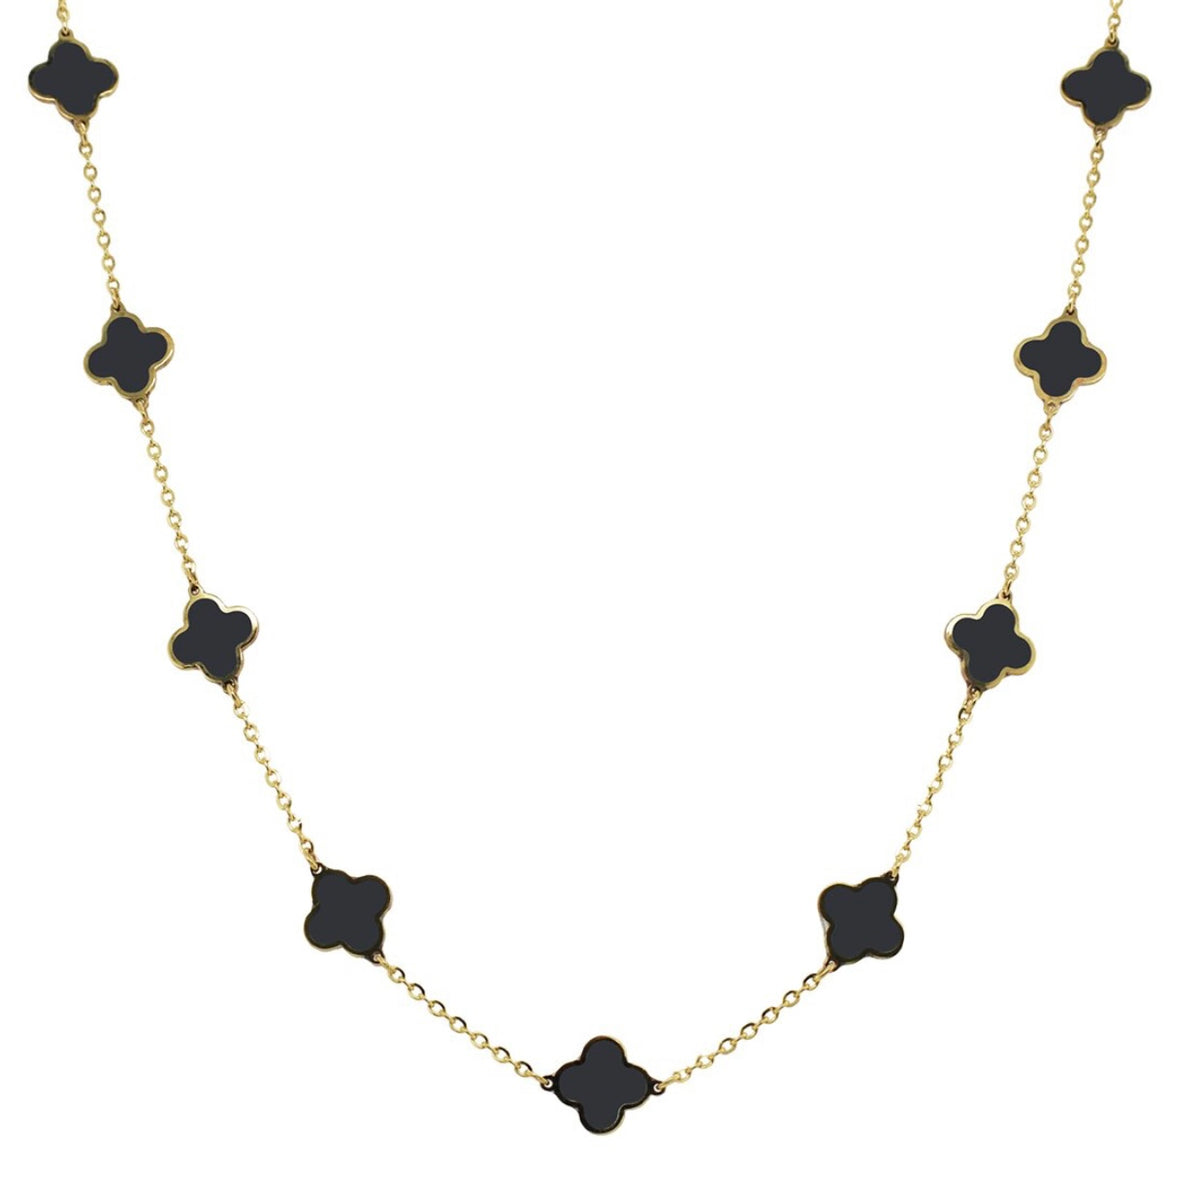 Stone Flower Necklace - Black Onyx